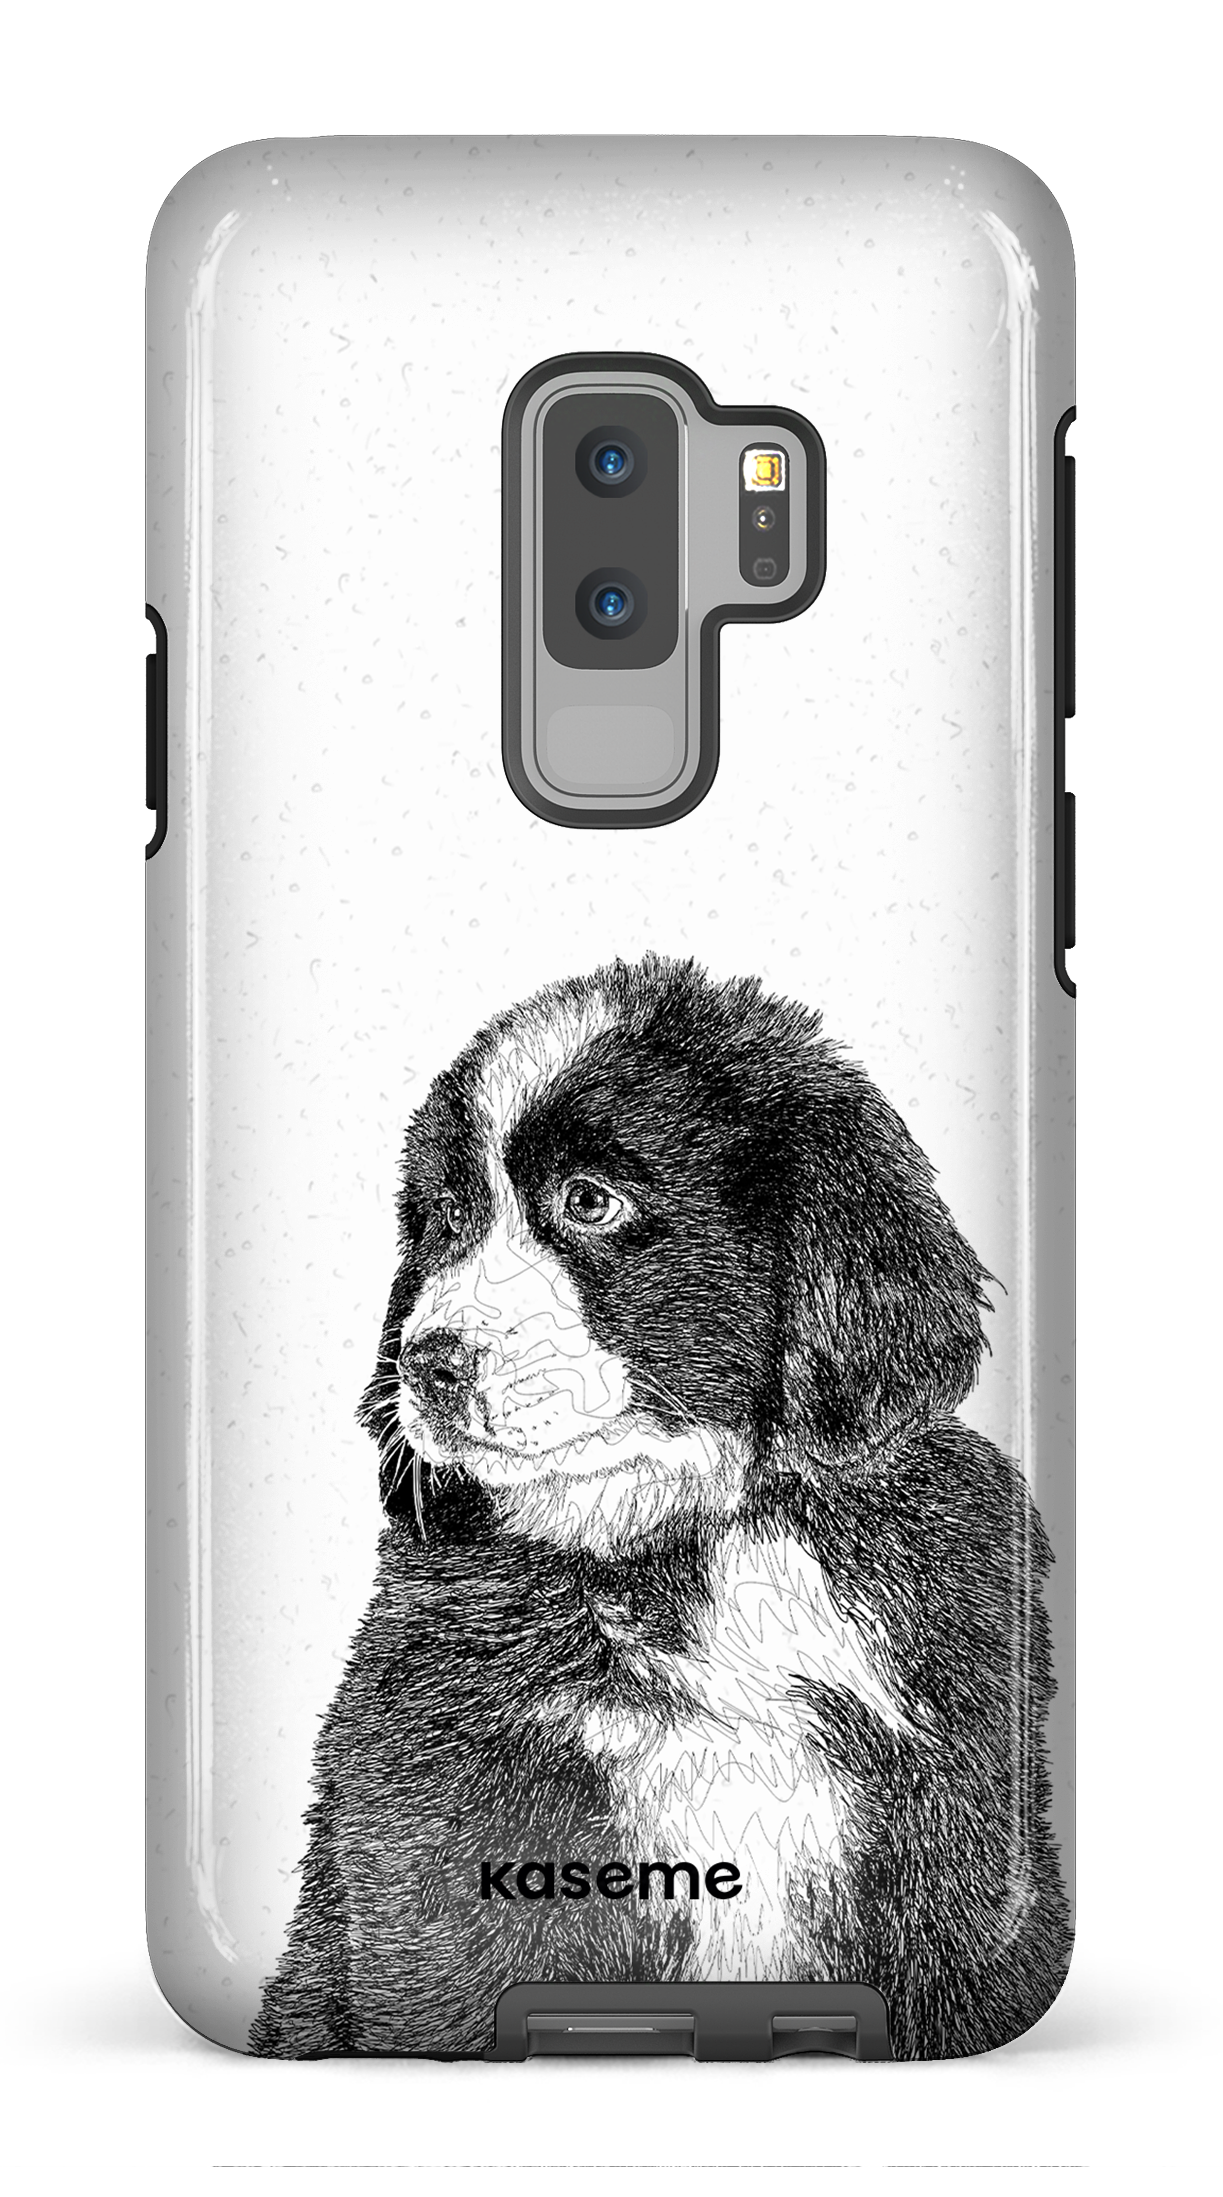 Bernese Mountain Dog - Galaxy S9 Plus